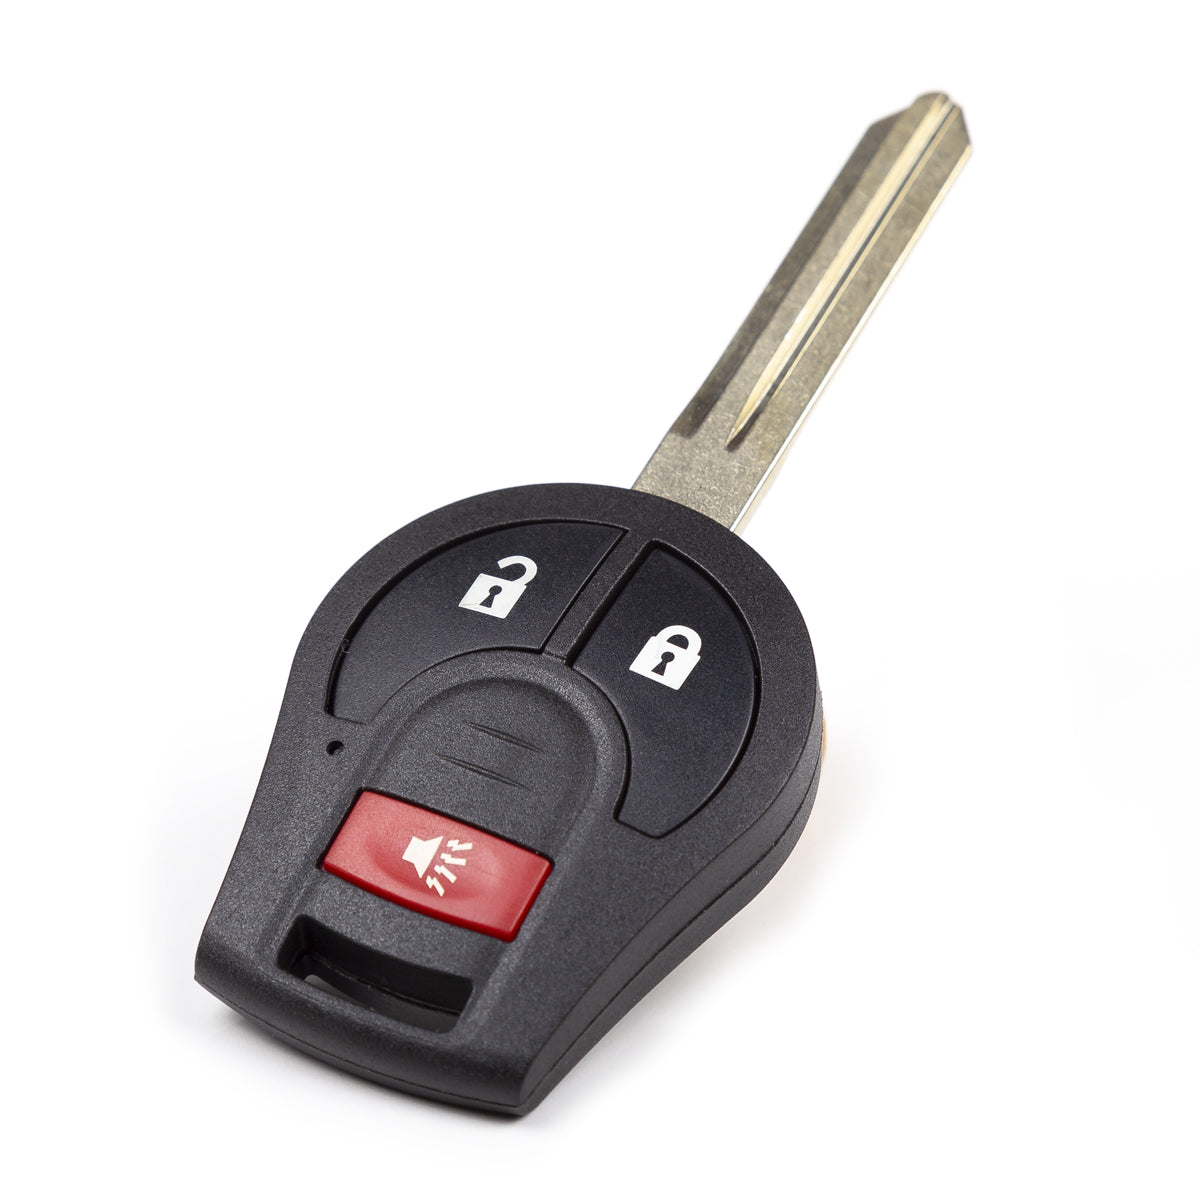 2009 Nissan Pathfinder Key Fob Replacement - Aftermarket - FCC# CWTWB1U751